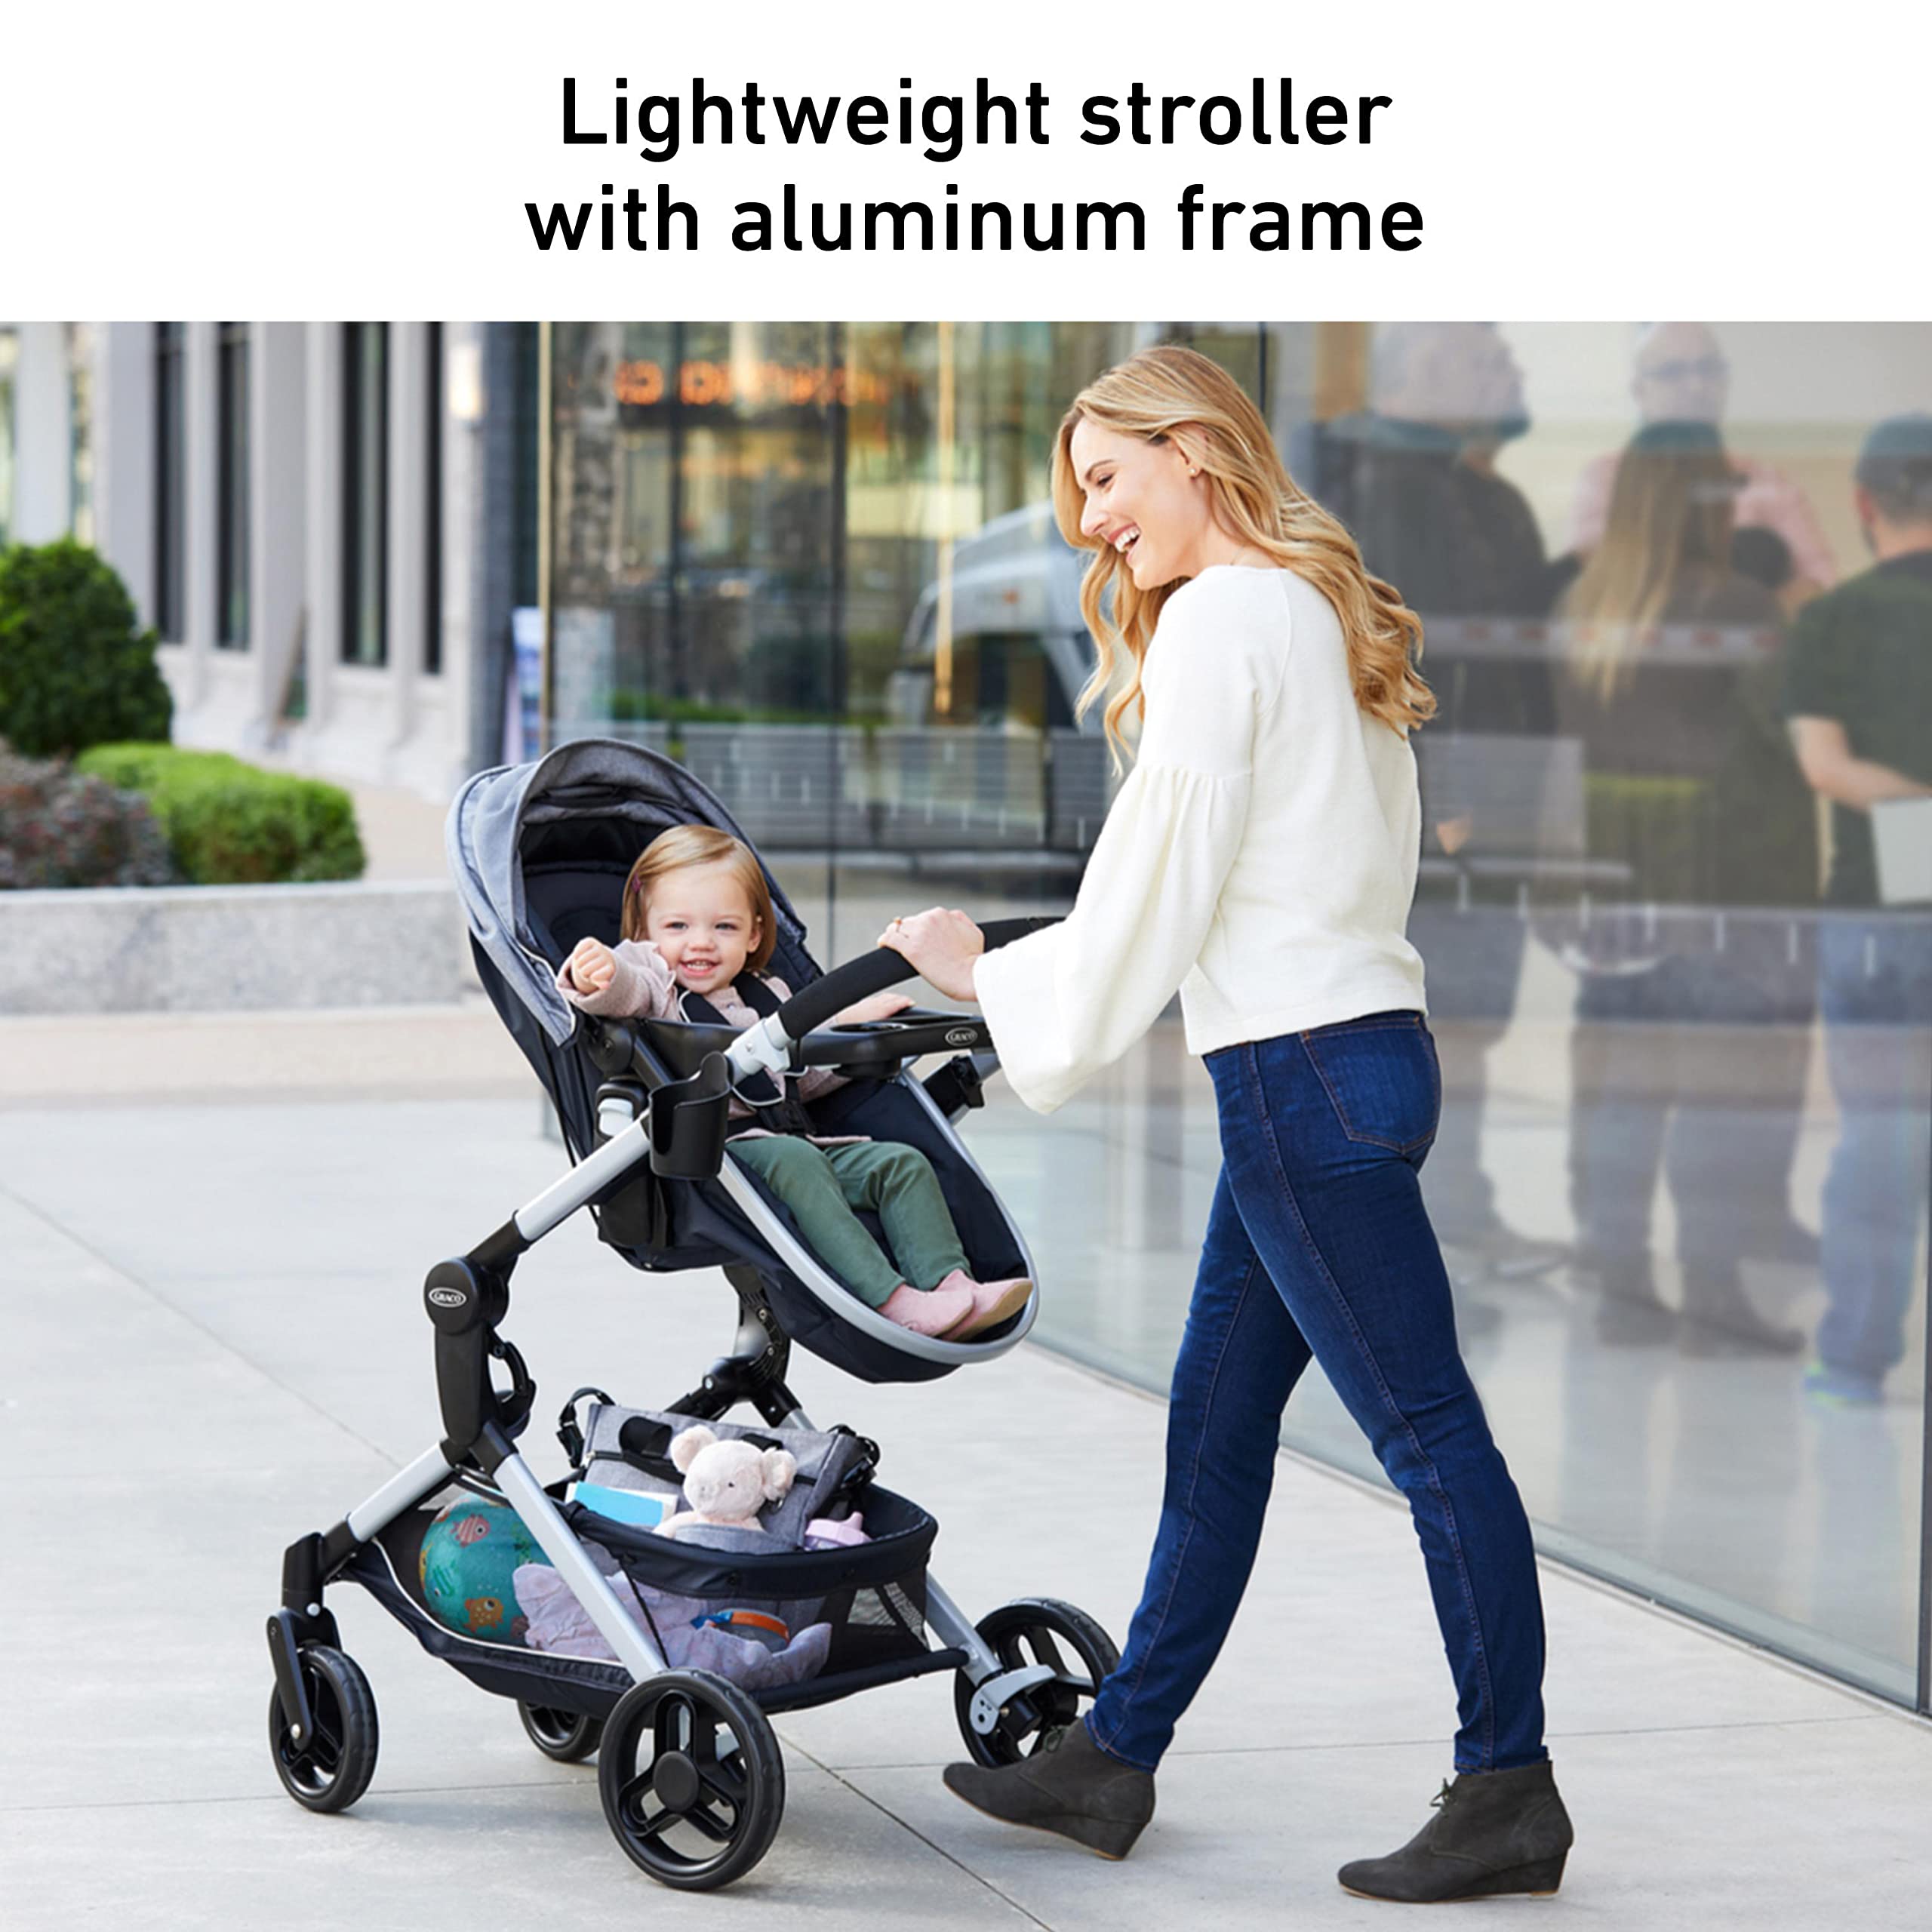 Graco Modes Nest Travel System, Includes Baby Stroller with Height Adjustable Reversible Seat, Pram Mode, Lightweight Aluminum Frame and SnugRide 35 Lite Elite Infant Car Seat, Sullivan